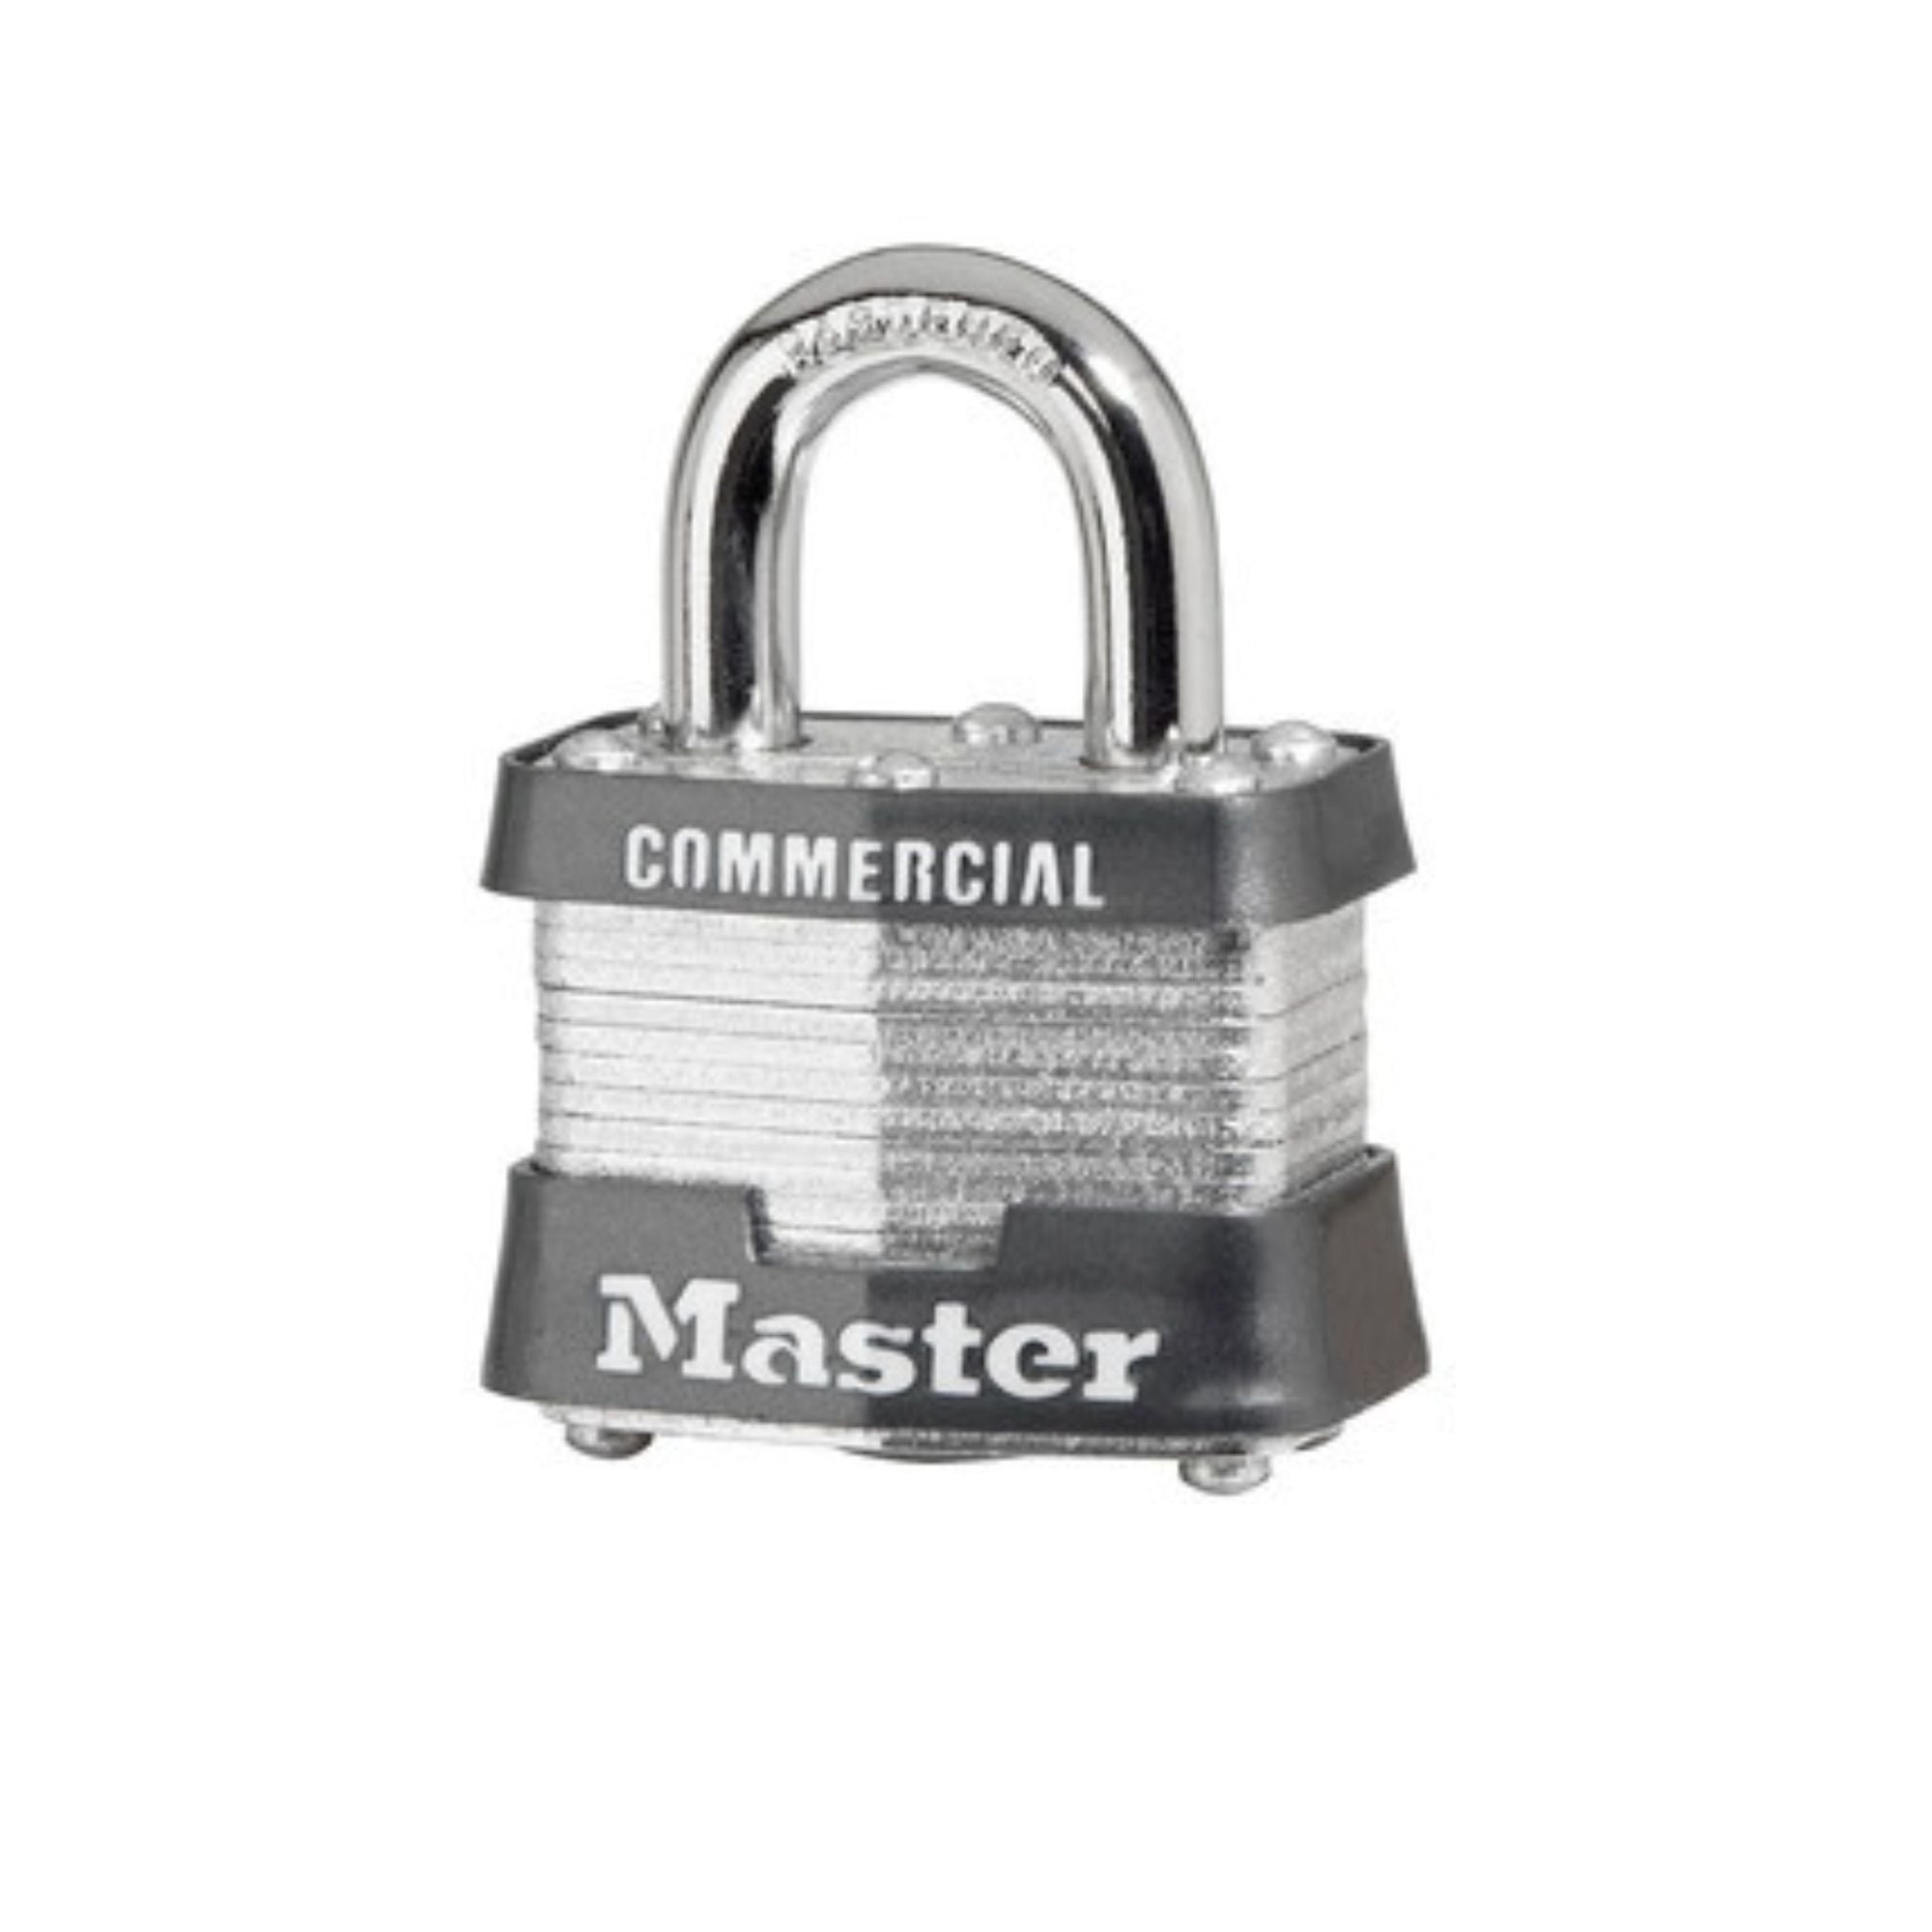 Master Lock 3KA 0316 Lock Laminated steel No. 3 Series Padlock Keyed to Match Existing Key Number KA0316 - The Lock Source